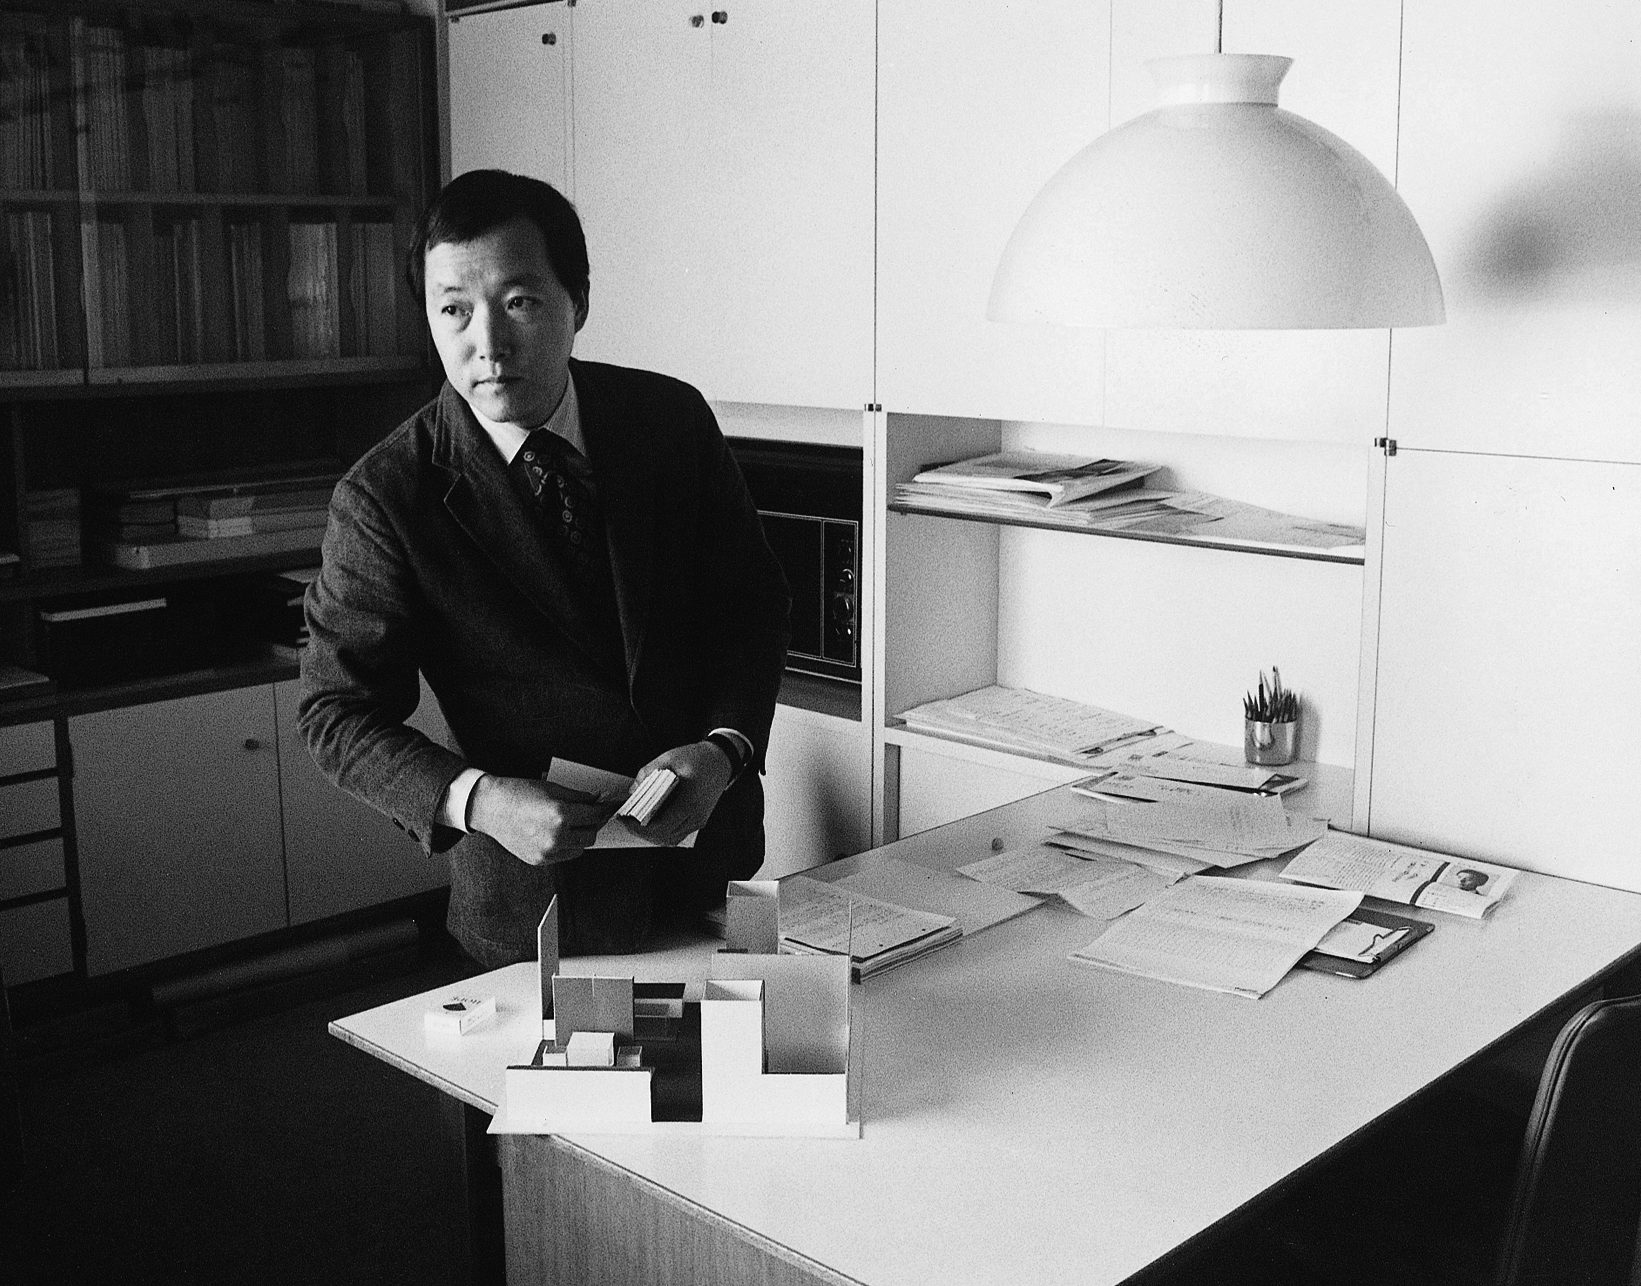 Photography of Ikko Tanaka in his studio, probably around 1970